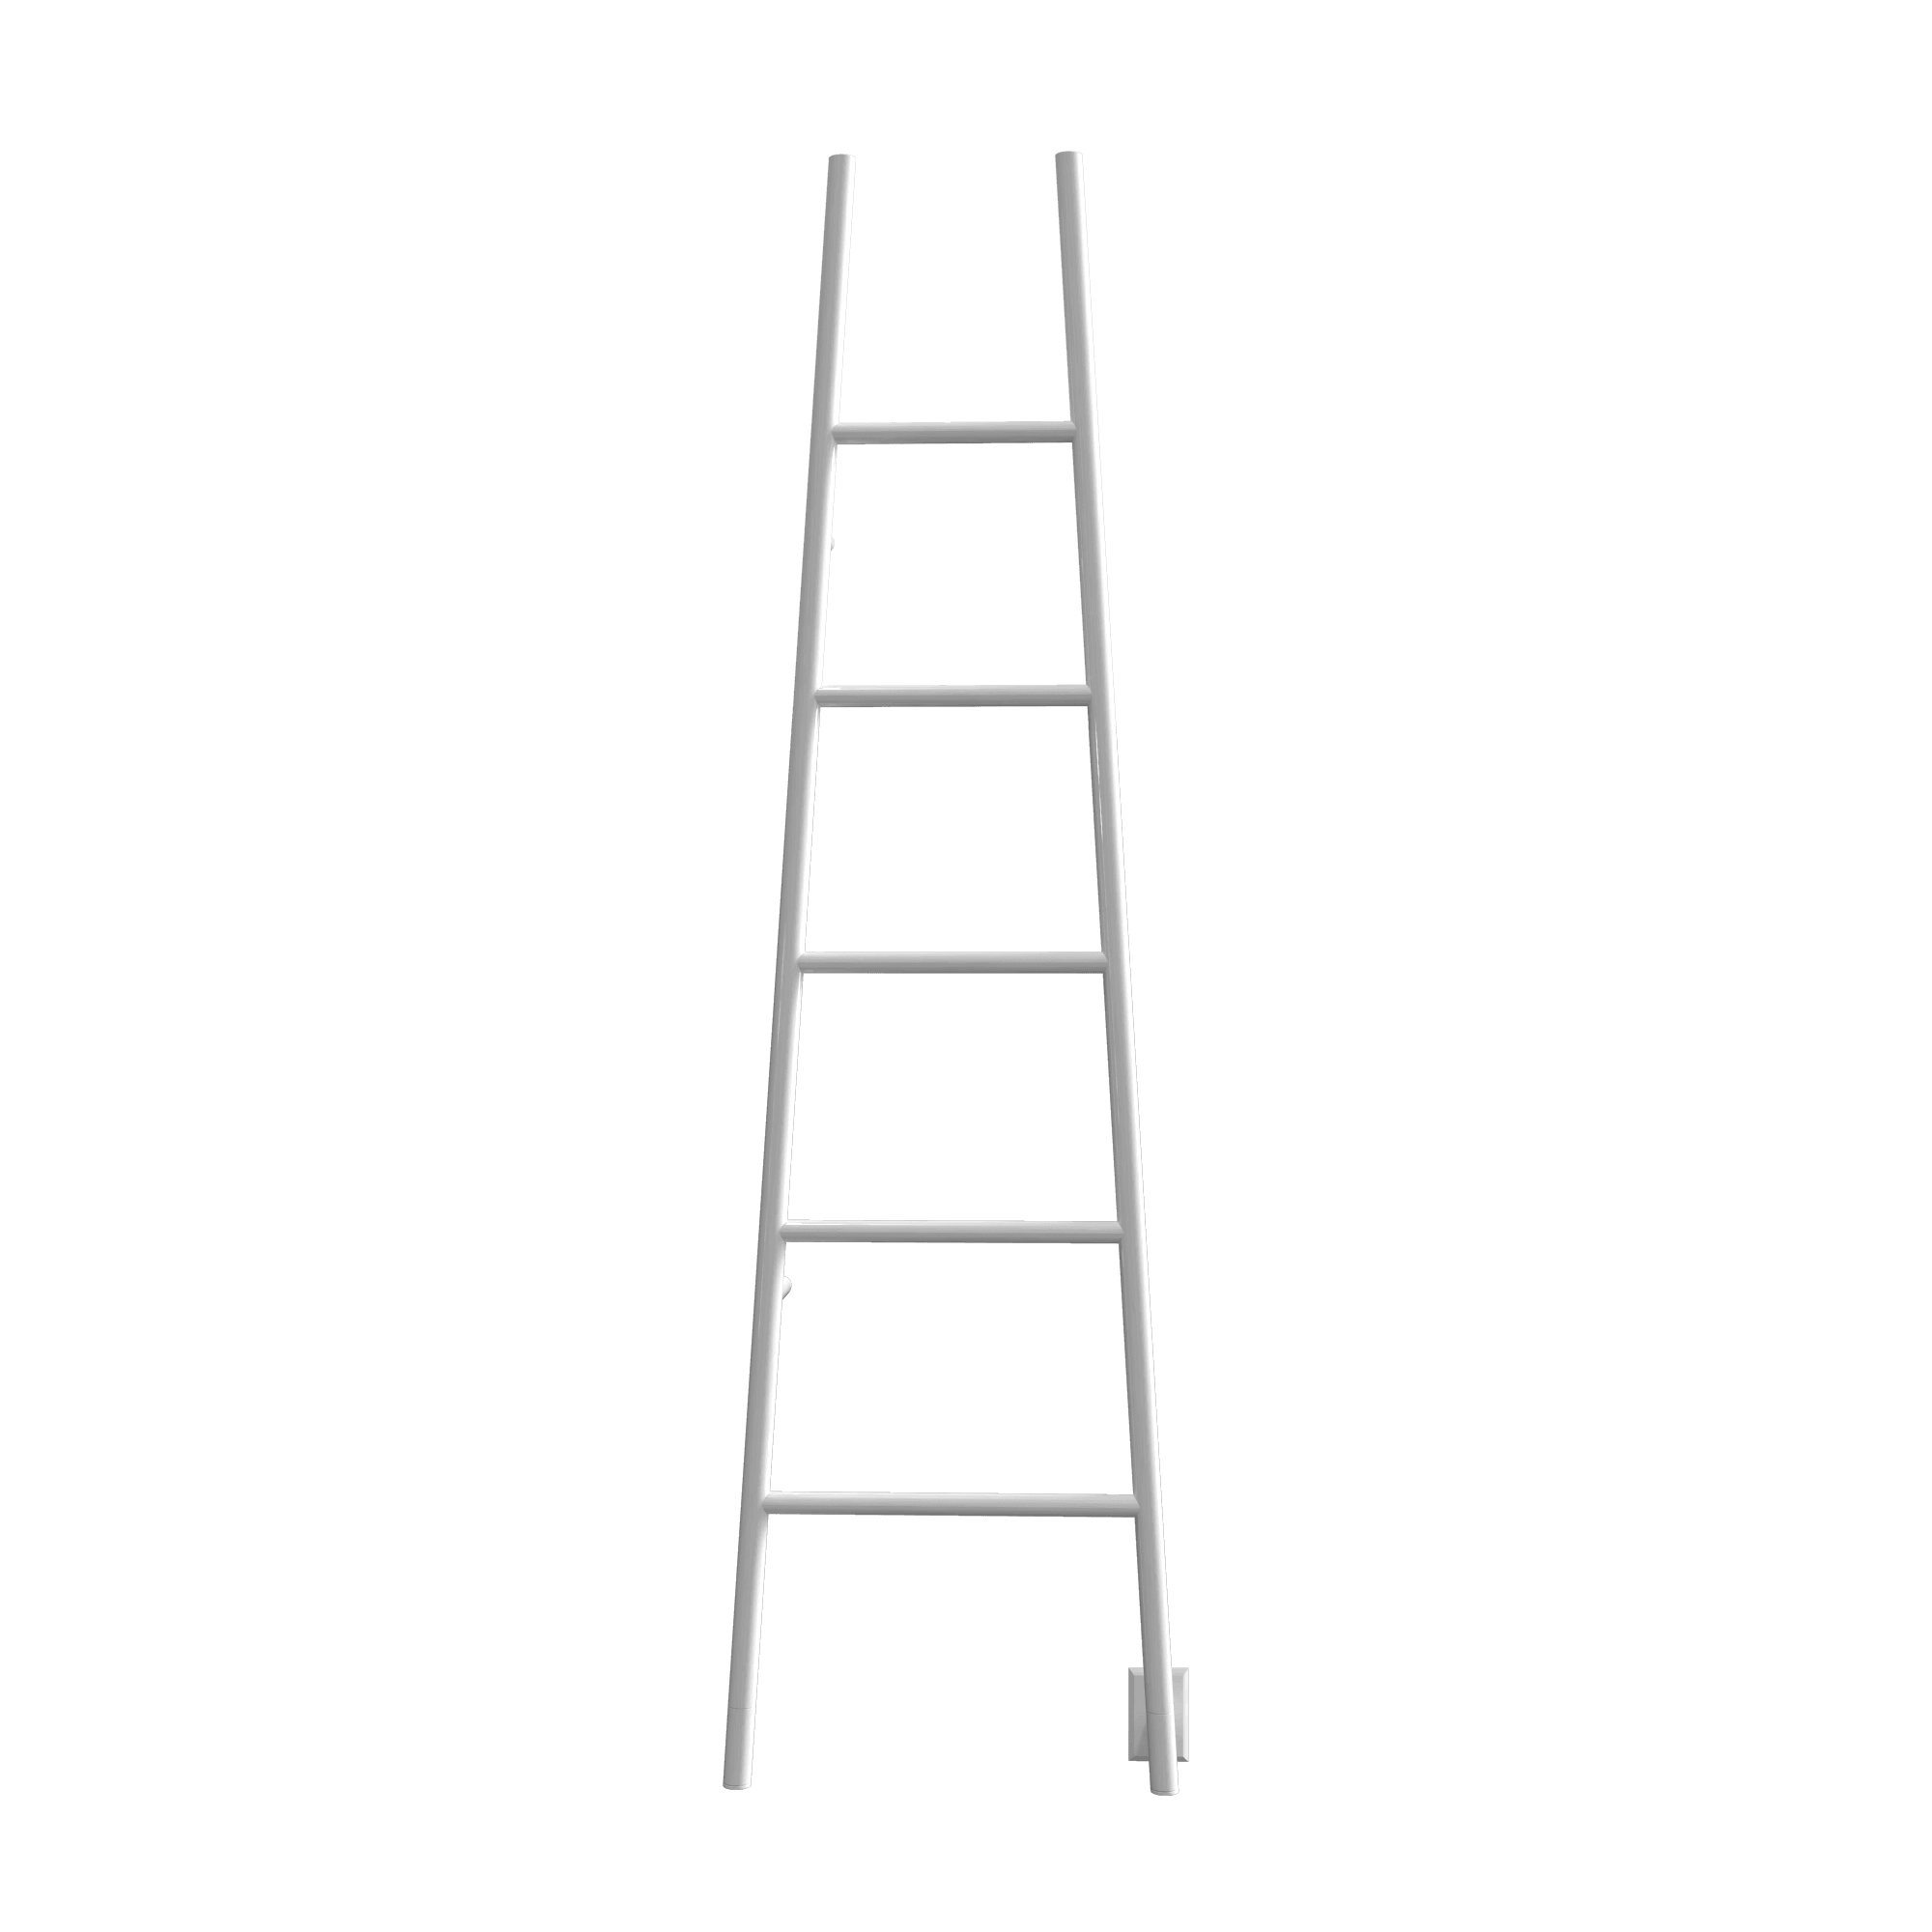 Amba Jeeves Model A Ladder Heated Towel Rack